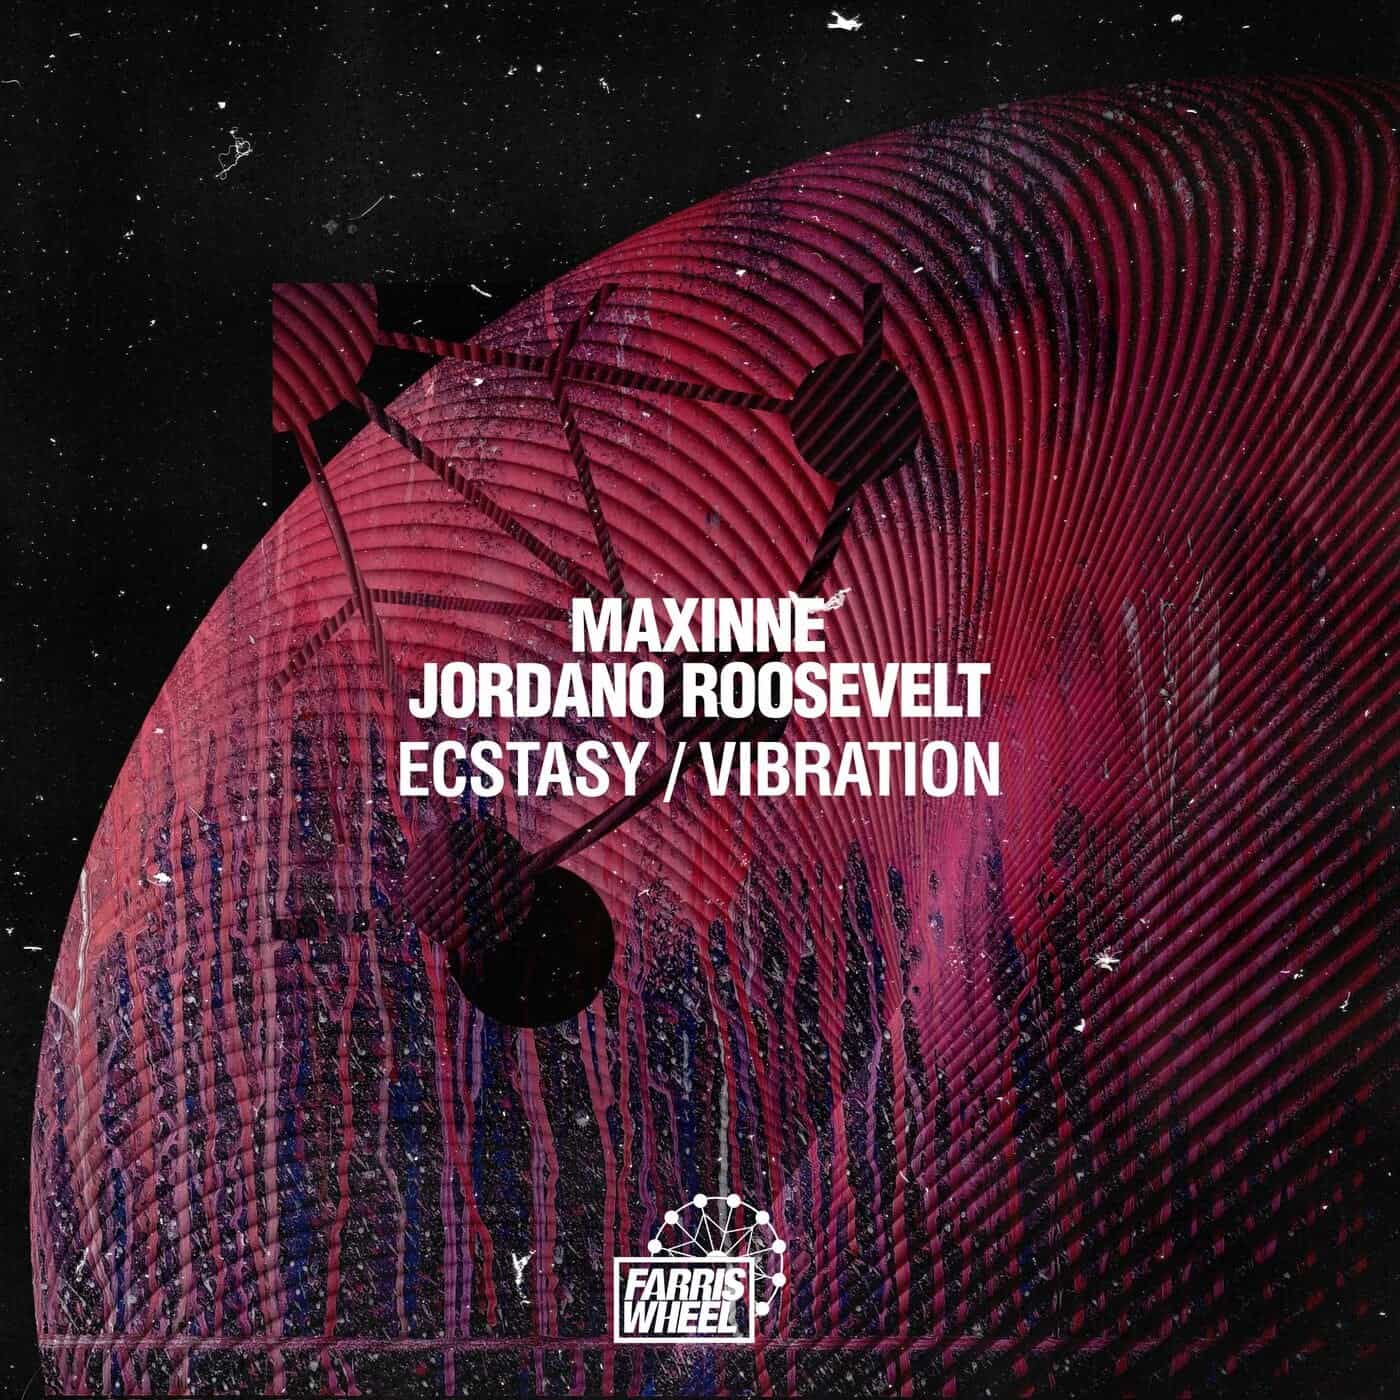 Download Jordano Roosevelt, Maxinne - Ecstasy / Vibration on Electrobuzz